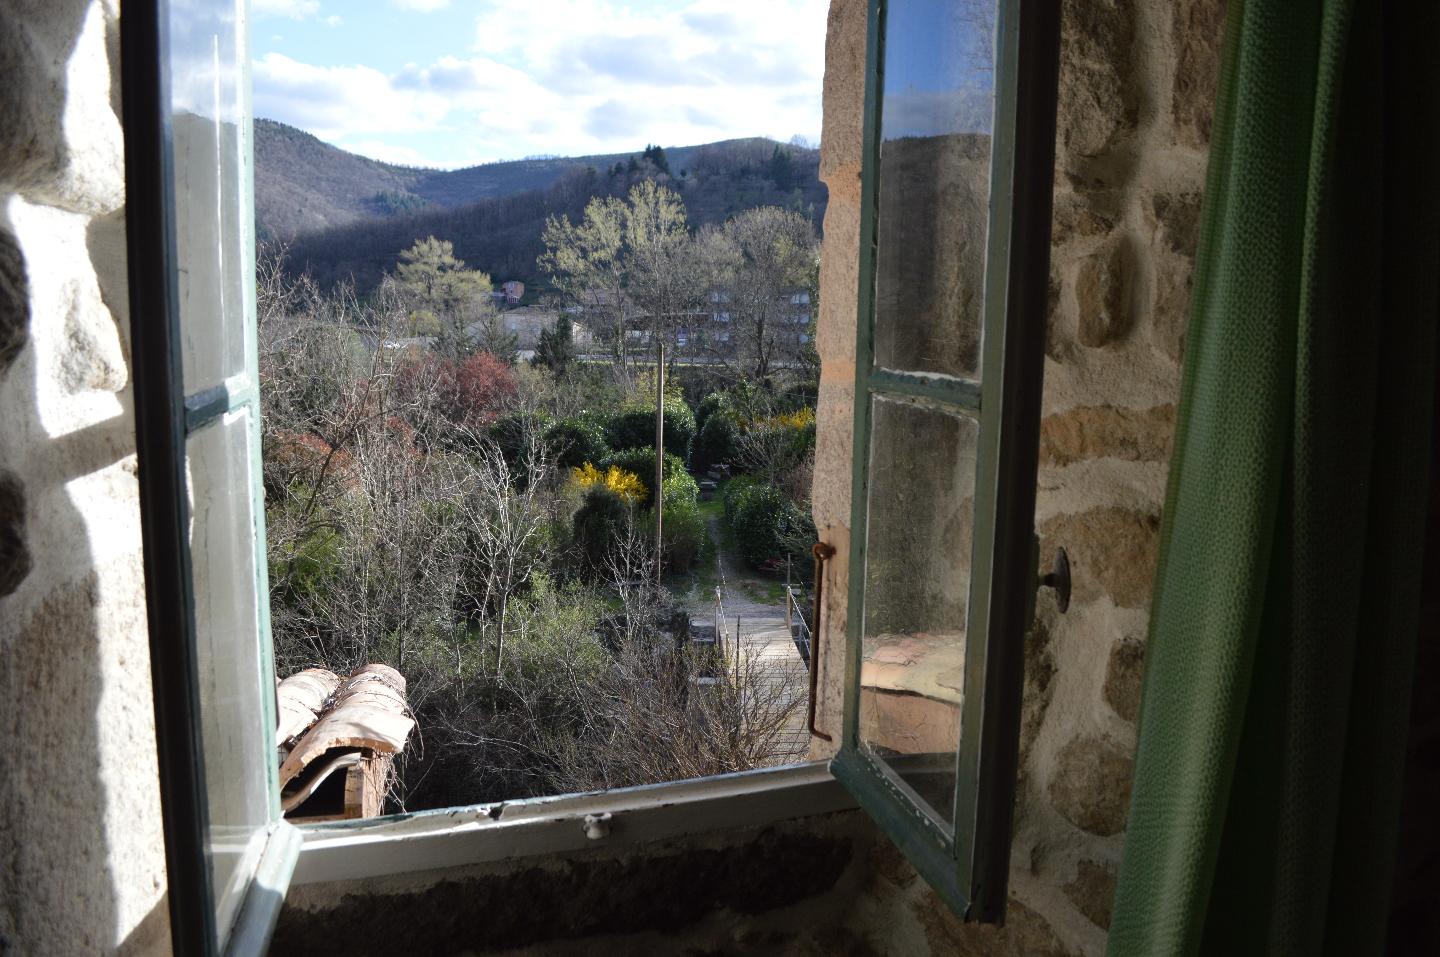 Hôte GreenGo: La Messicole, un eco-lieu en Ardèche - Image 21